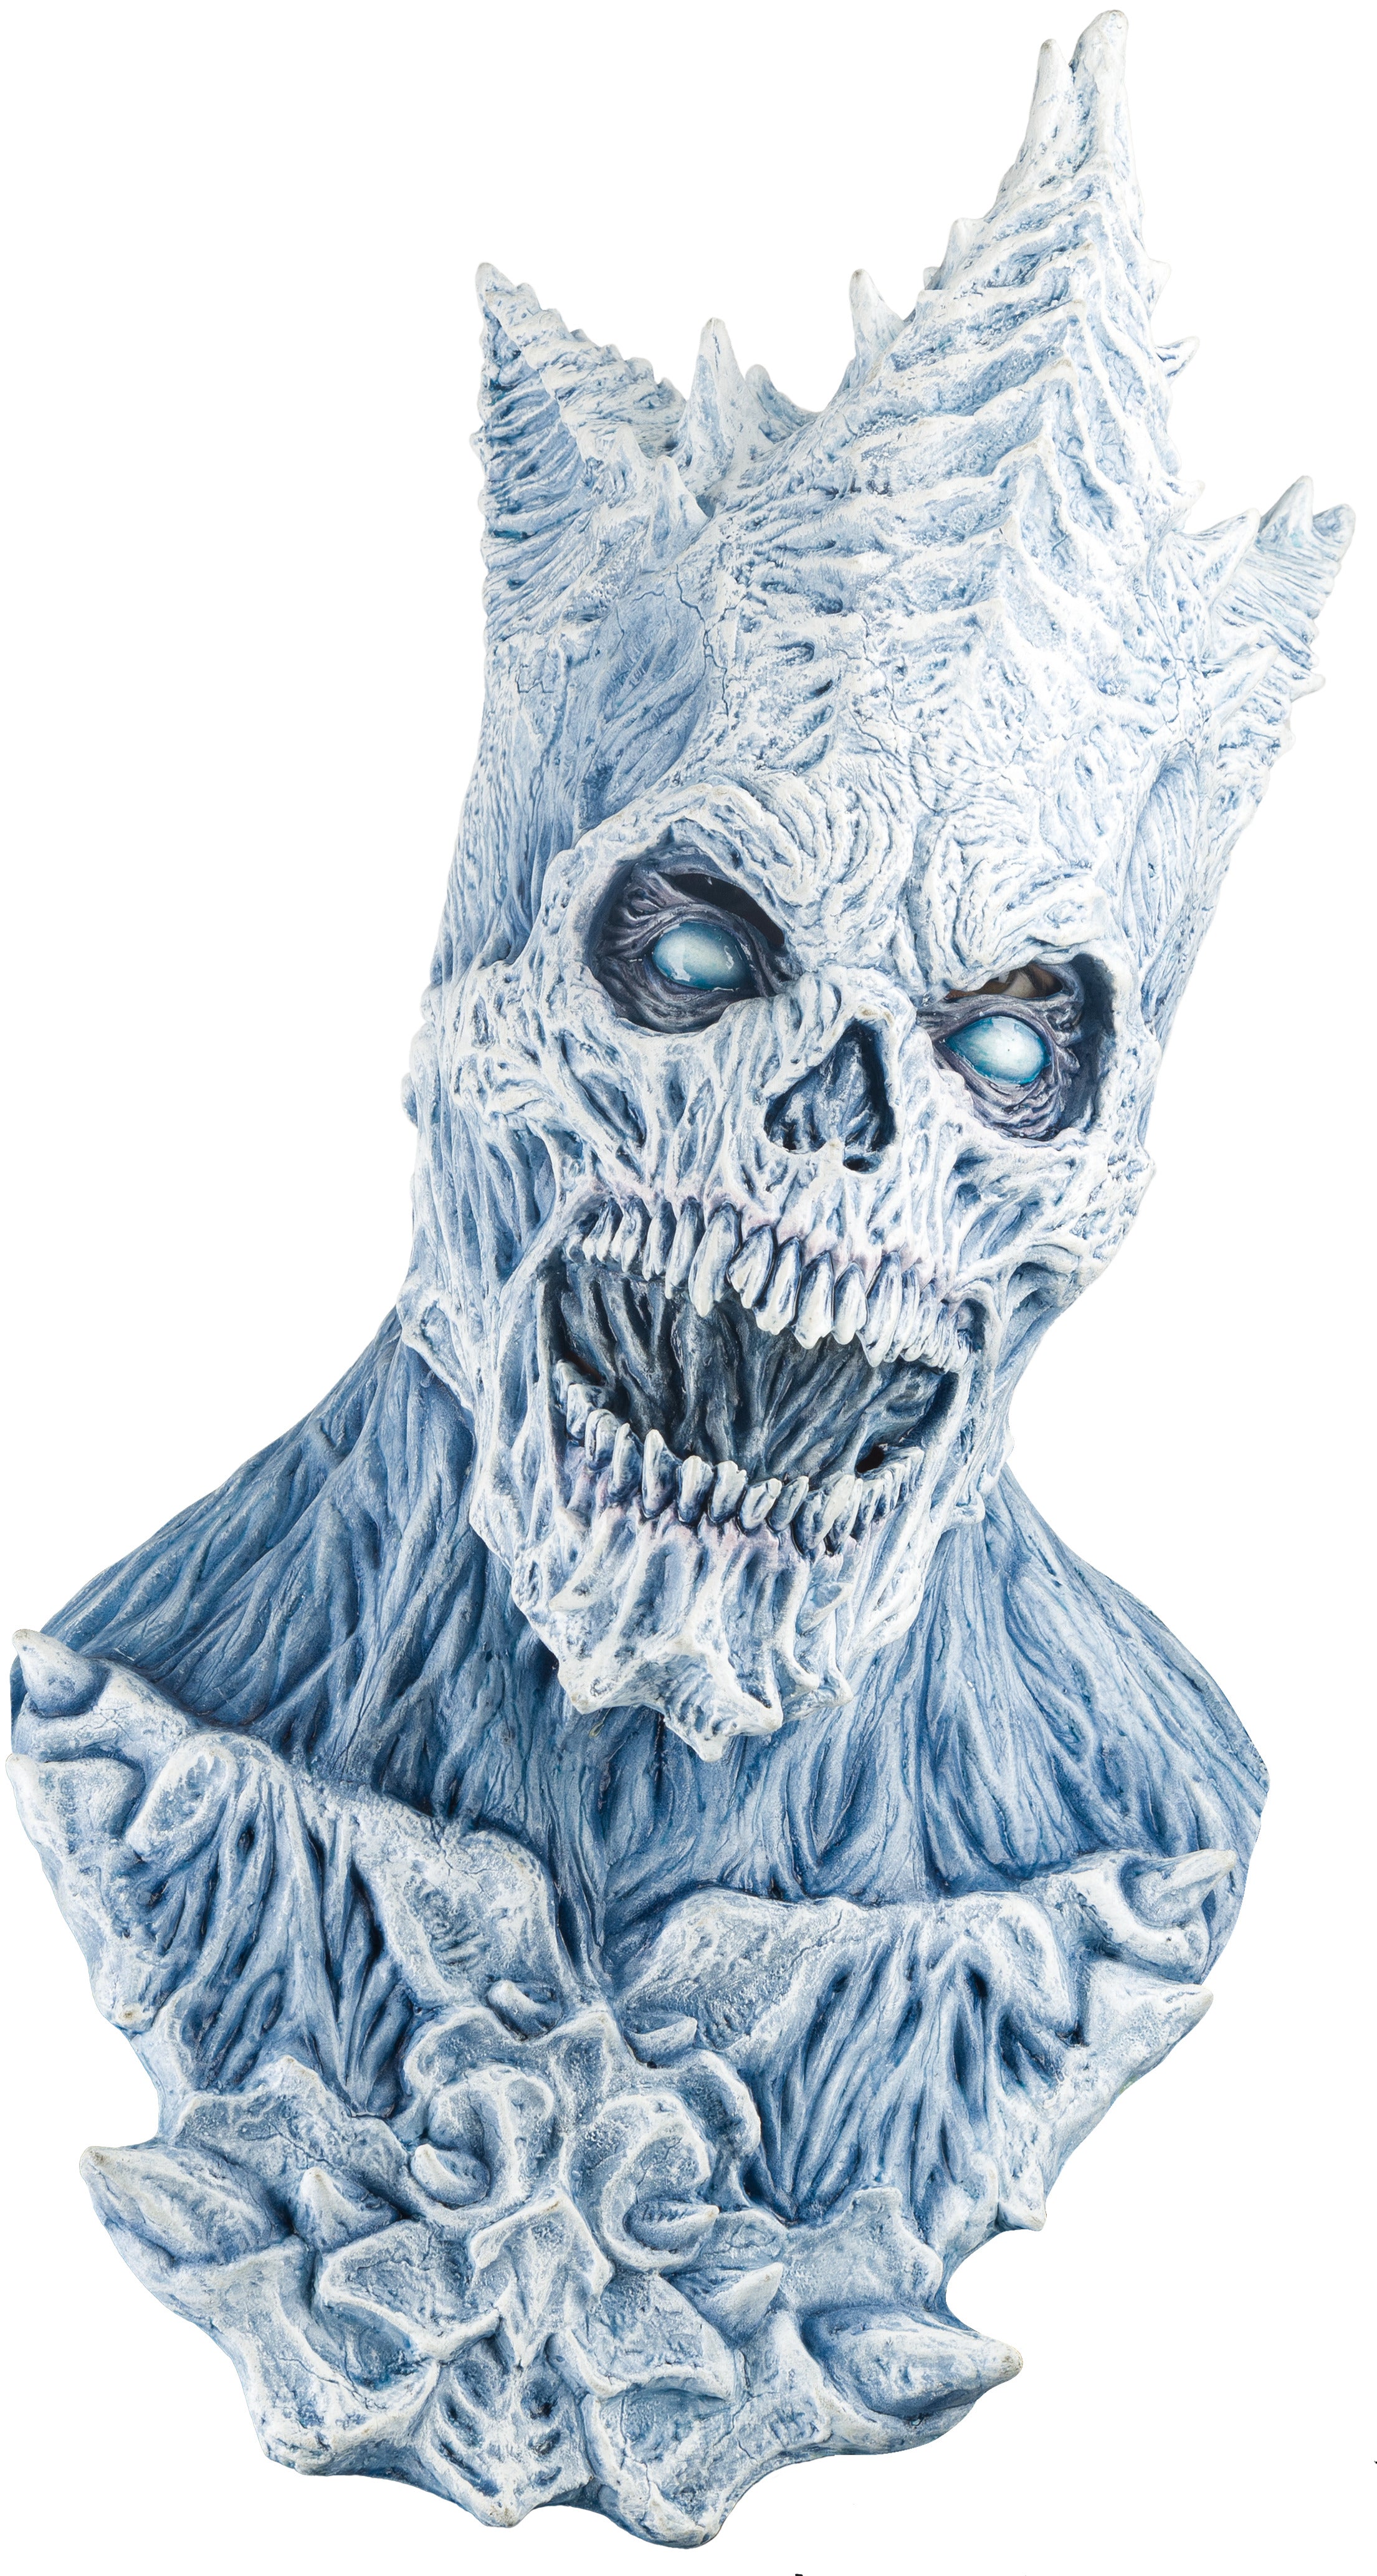 Icy King Reaper Latex Mask